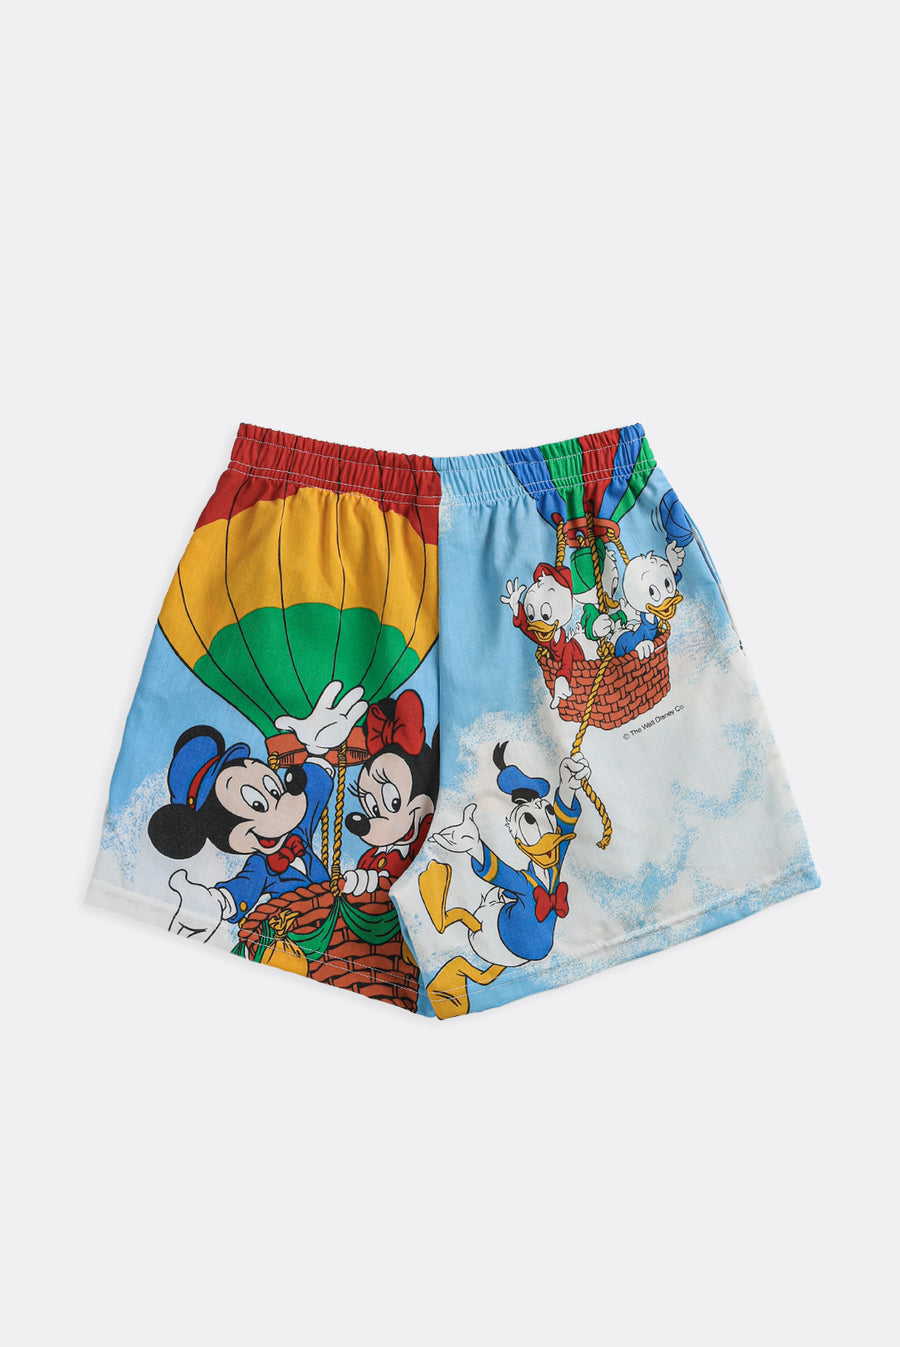 Unisex Rework Mickey & Friends Boxer Shorts - XS